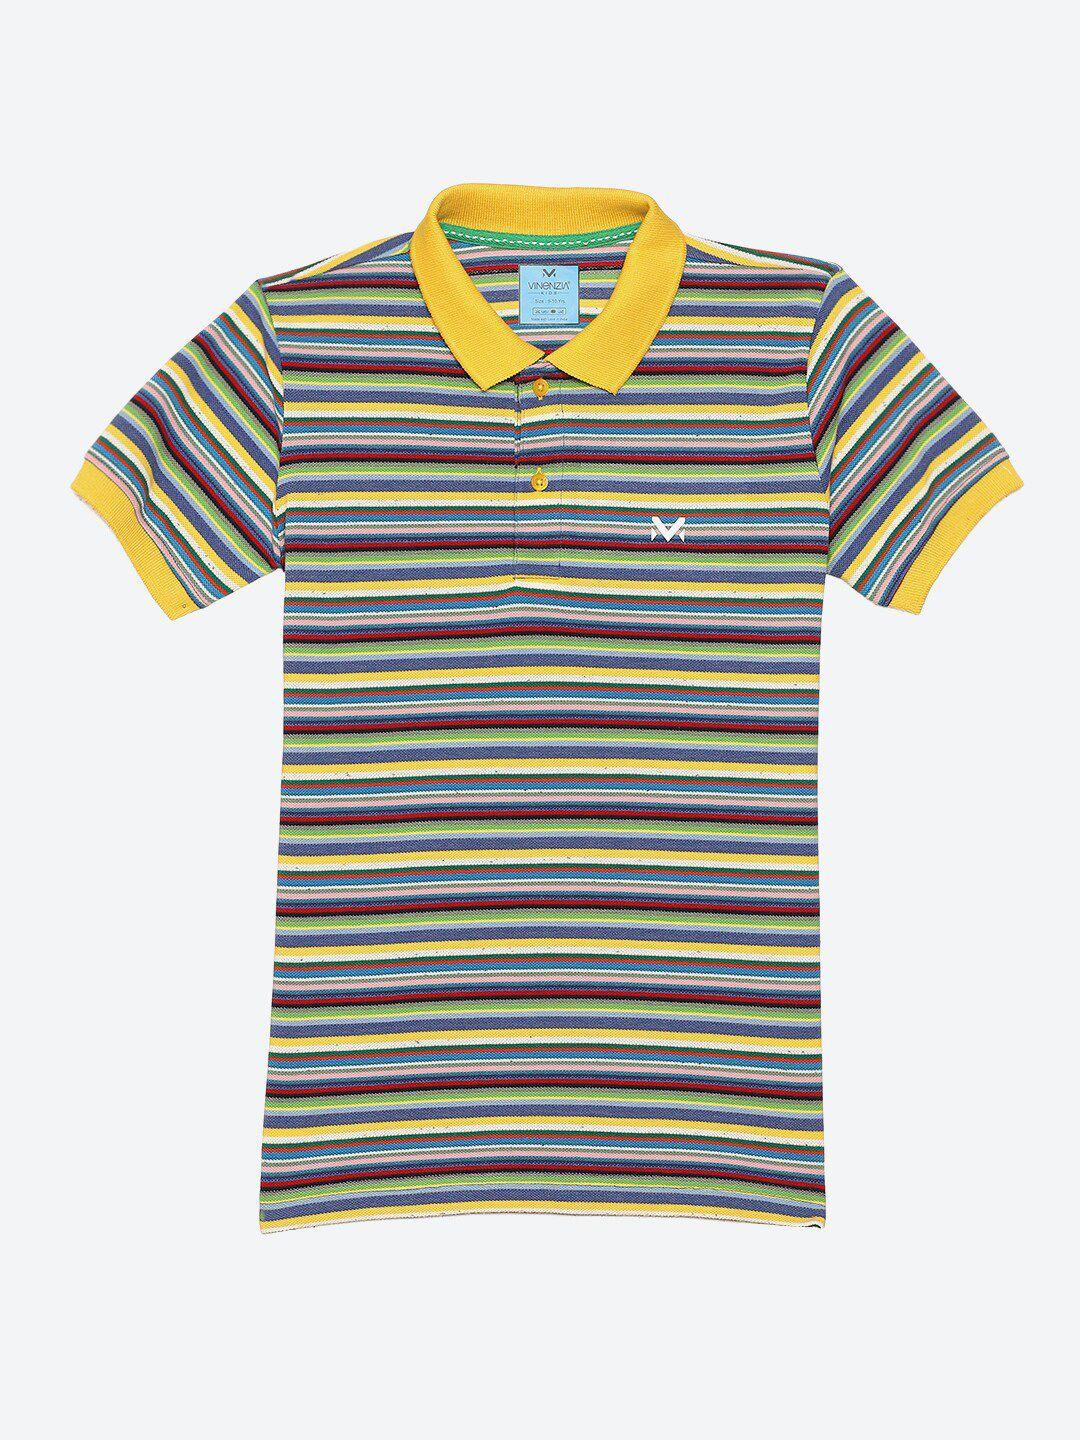 vinenzia boys yellow striped v-neck t-shirt